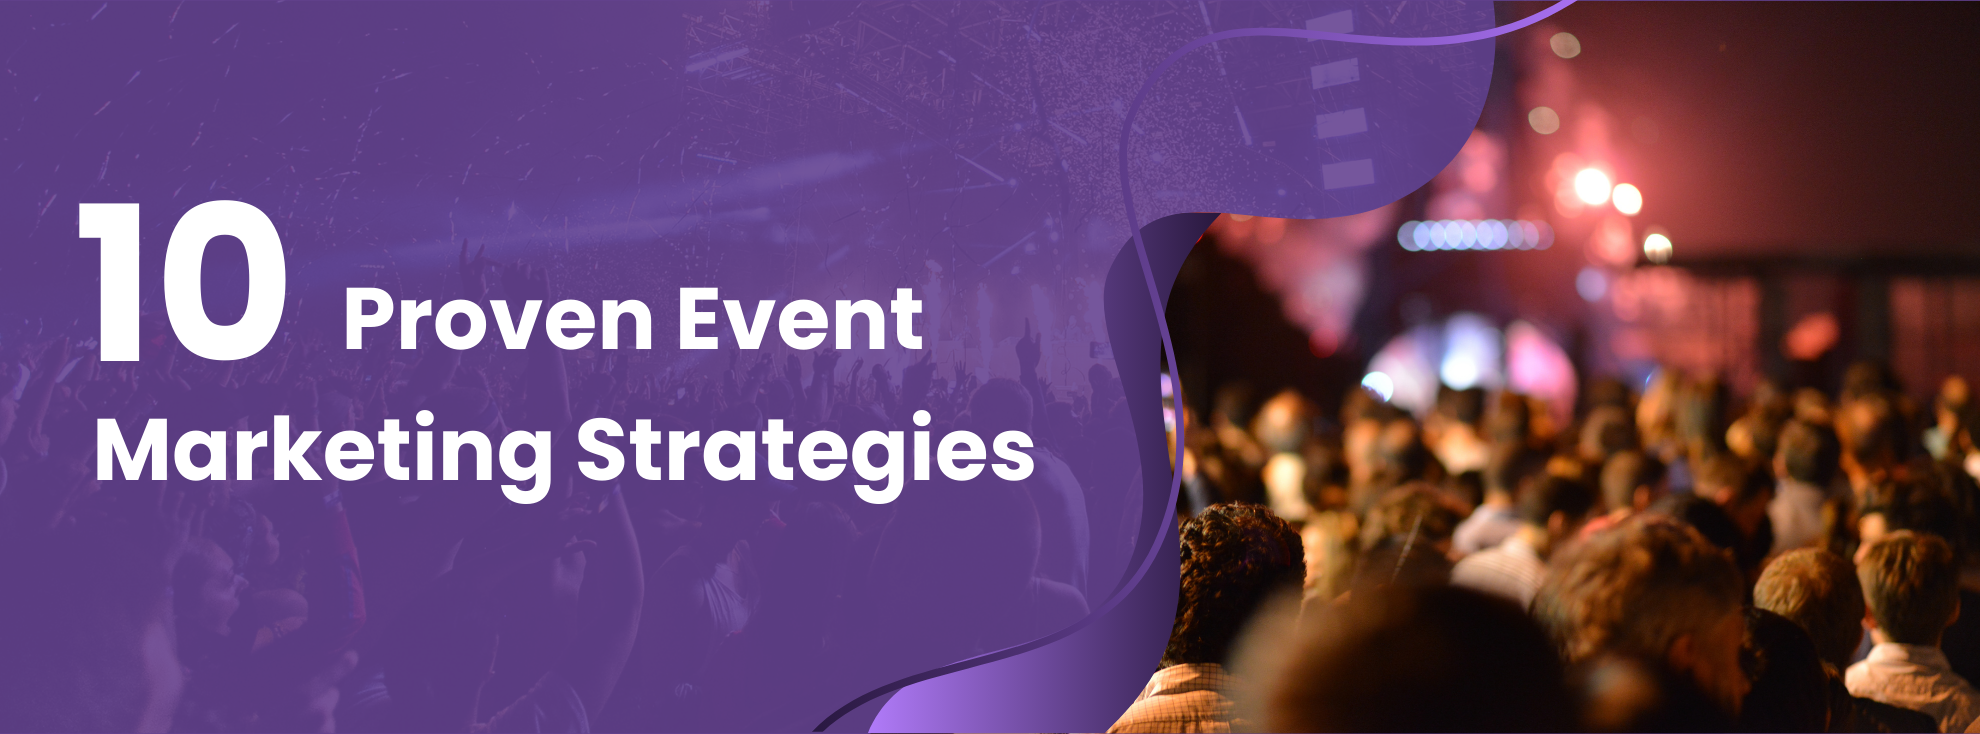 10 proven event marketing strategies - Banner